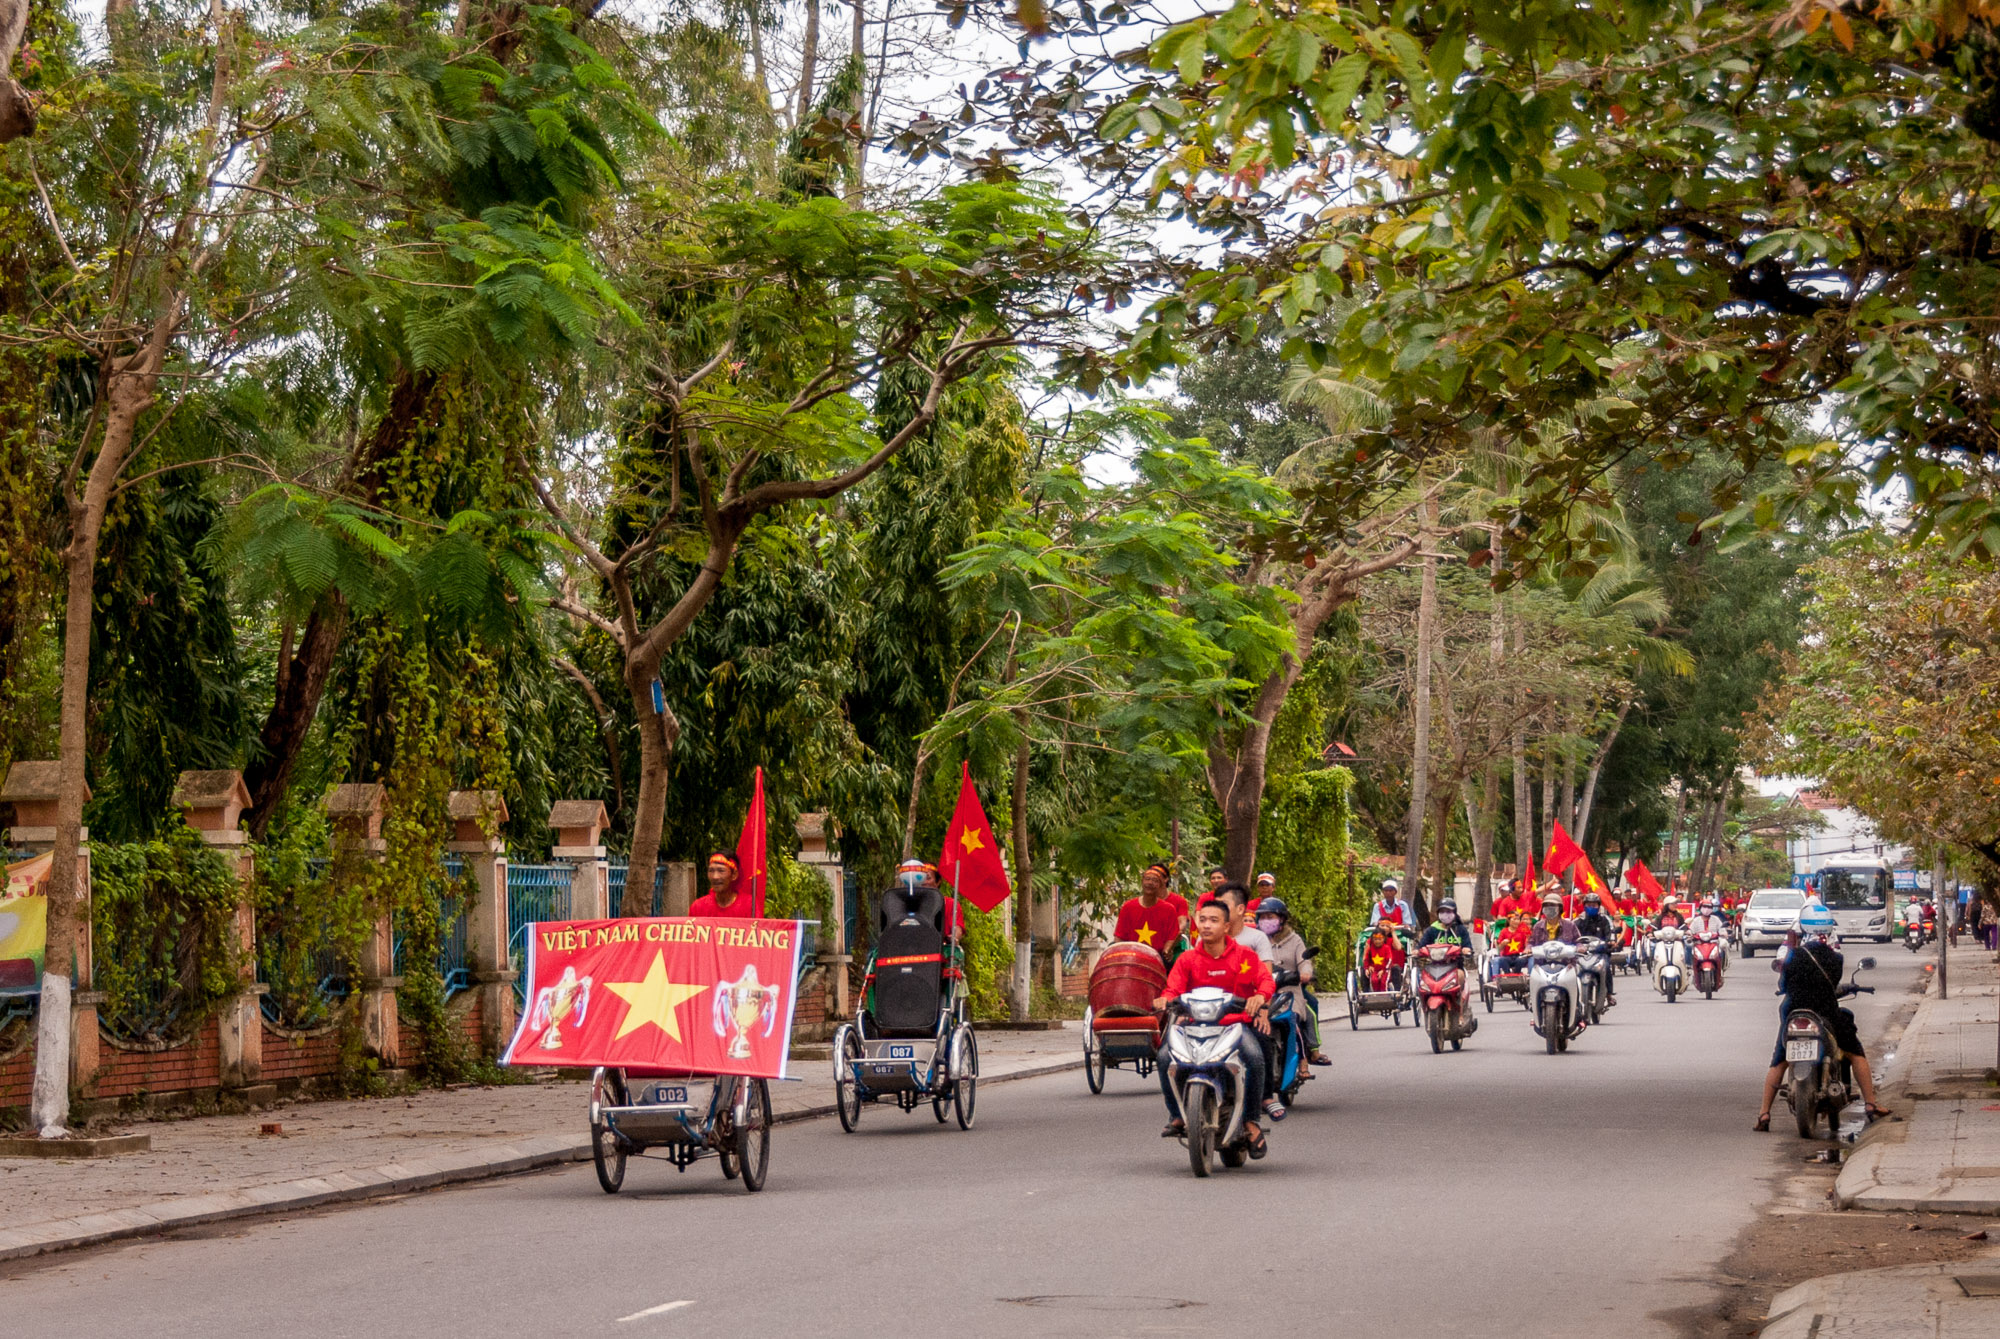 Motorbikes parade through Hoi An